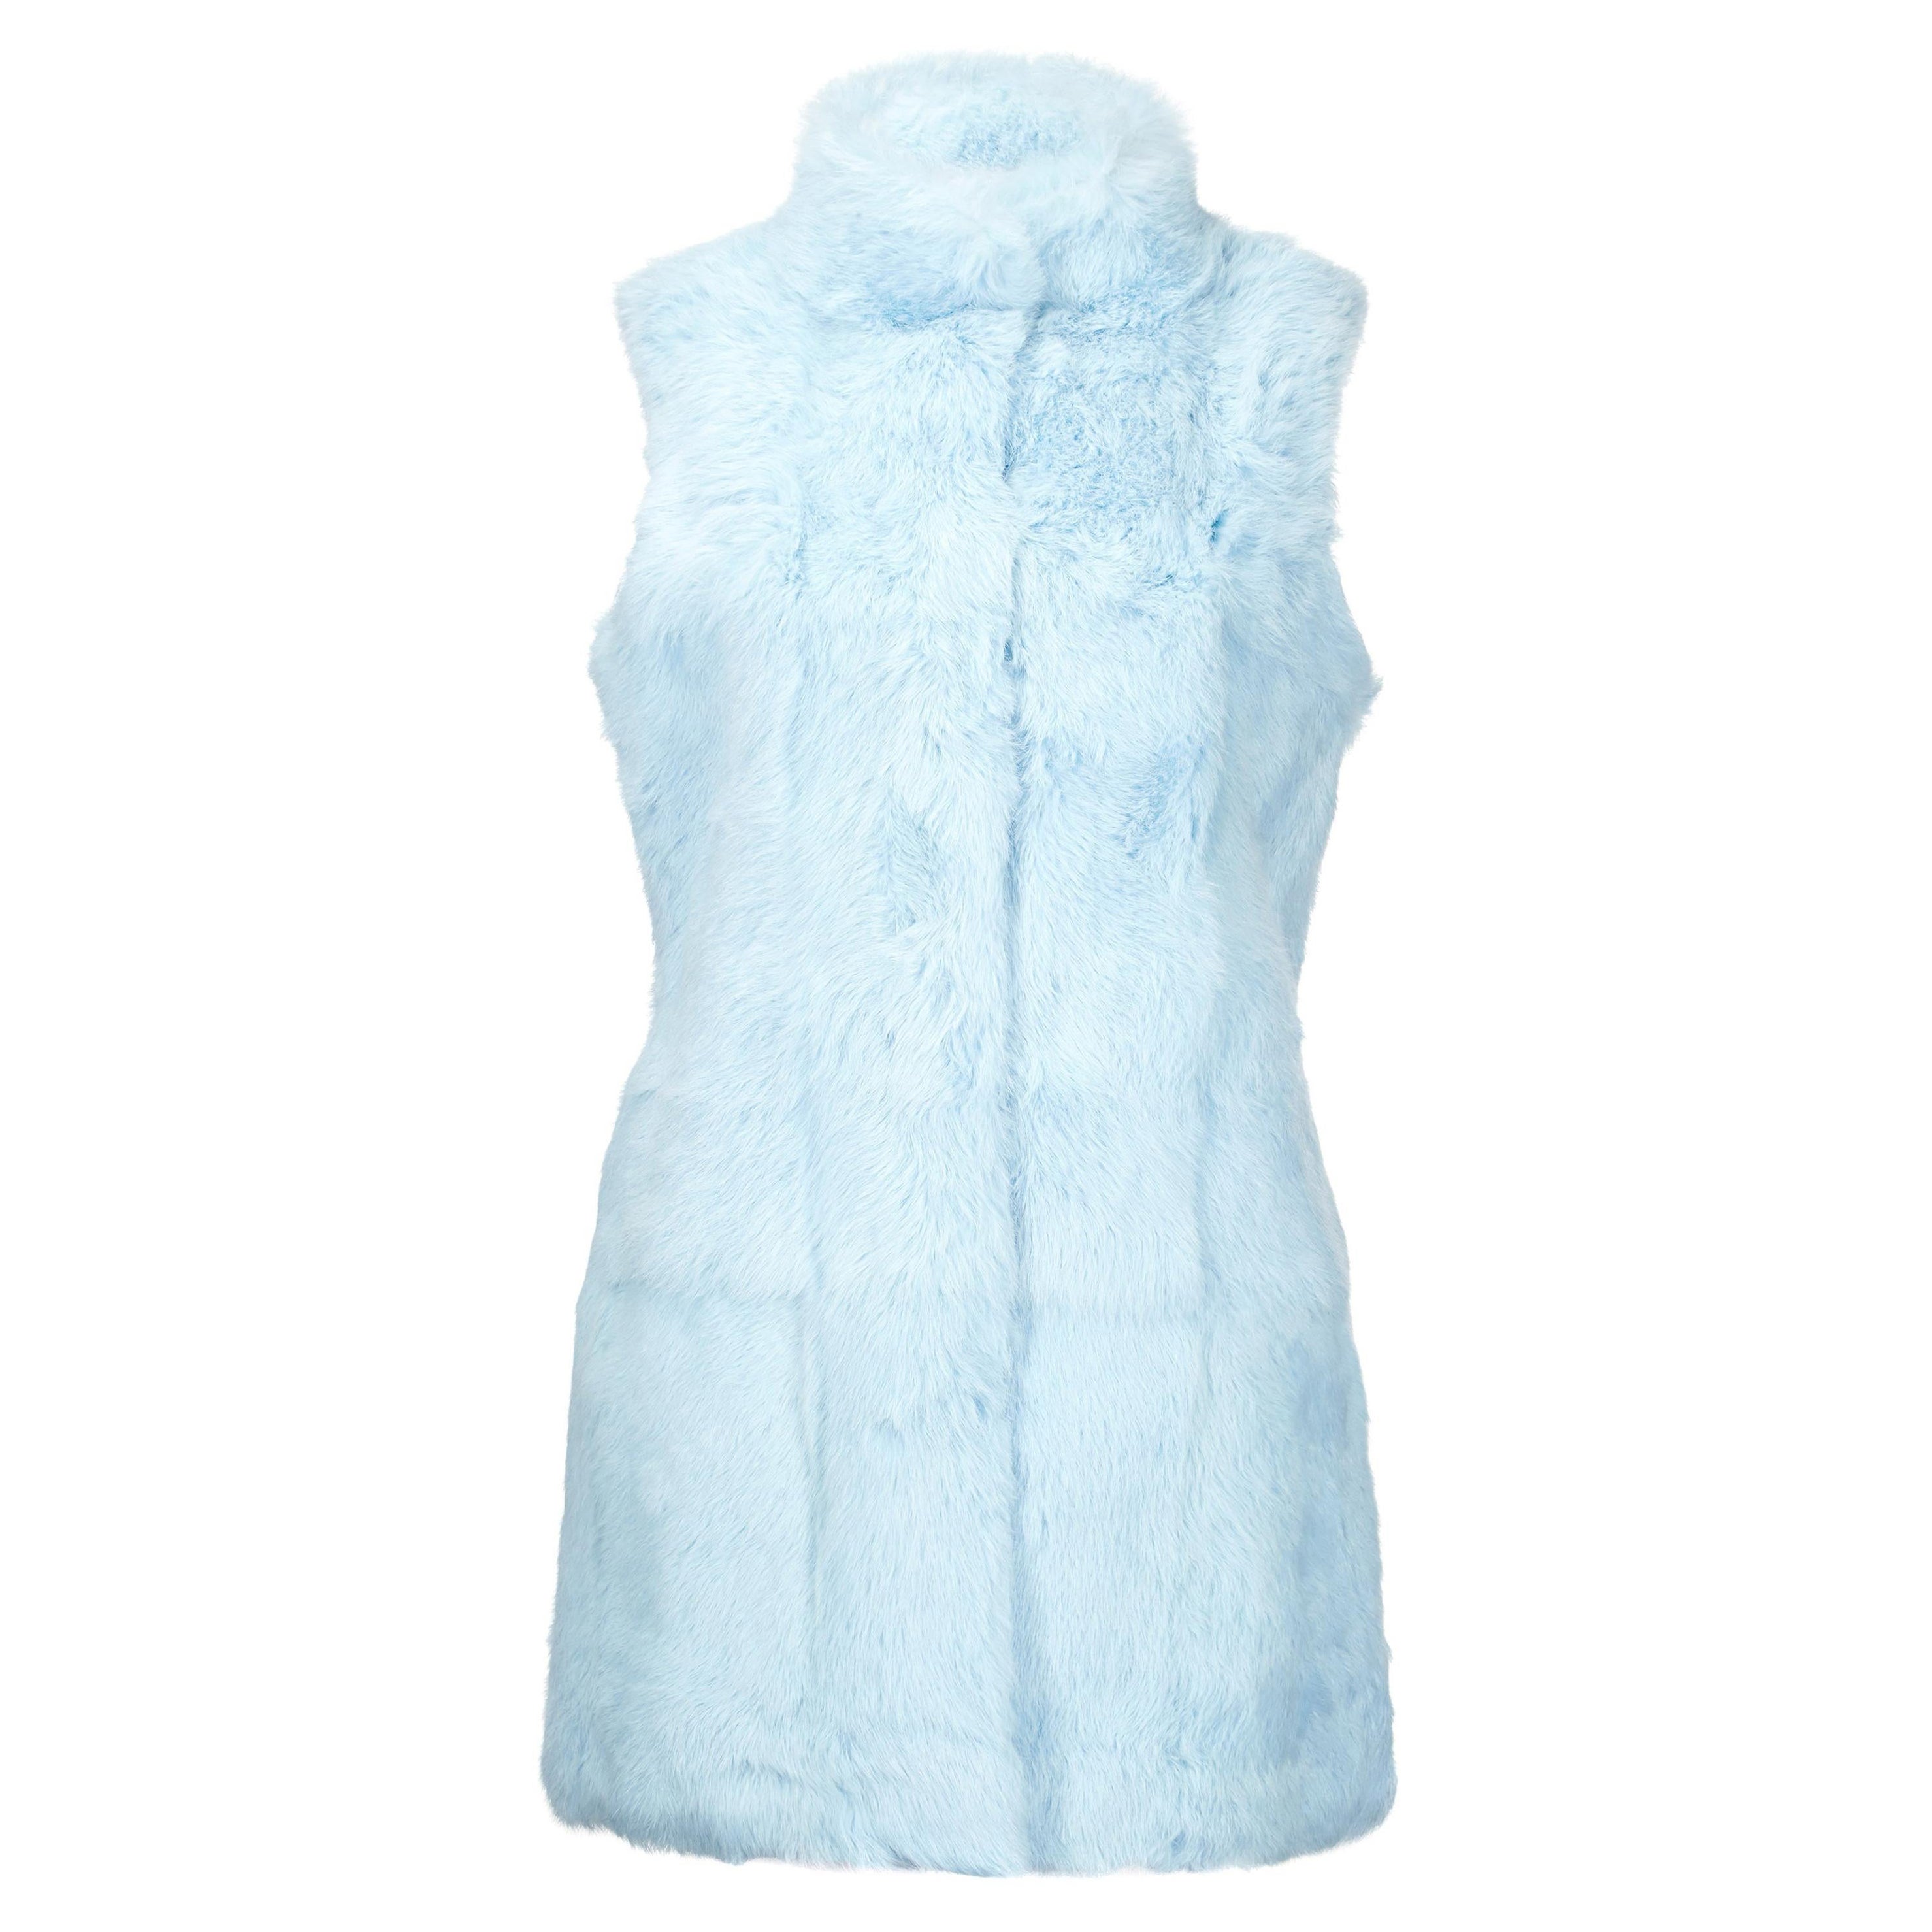 Verheyen London Nehru Gilet in Rabbit Fur in Iced Blue Topaz - Size UK 8-12 For Sale